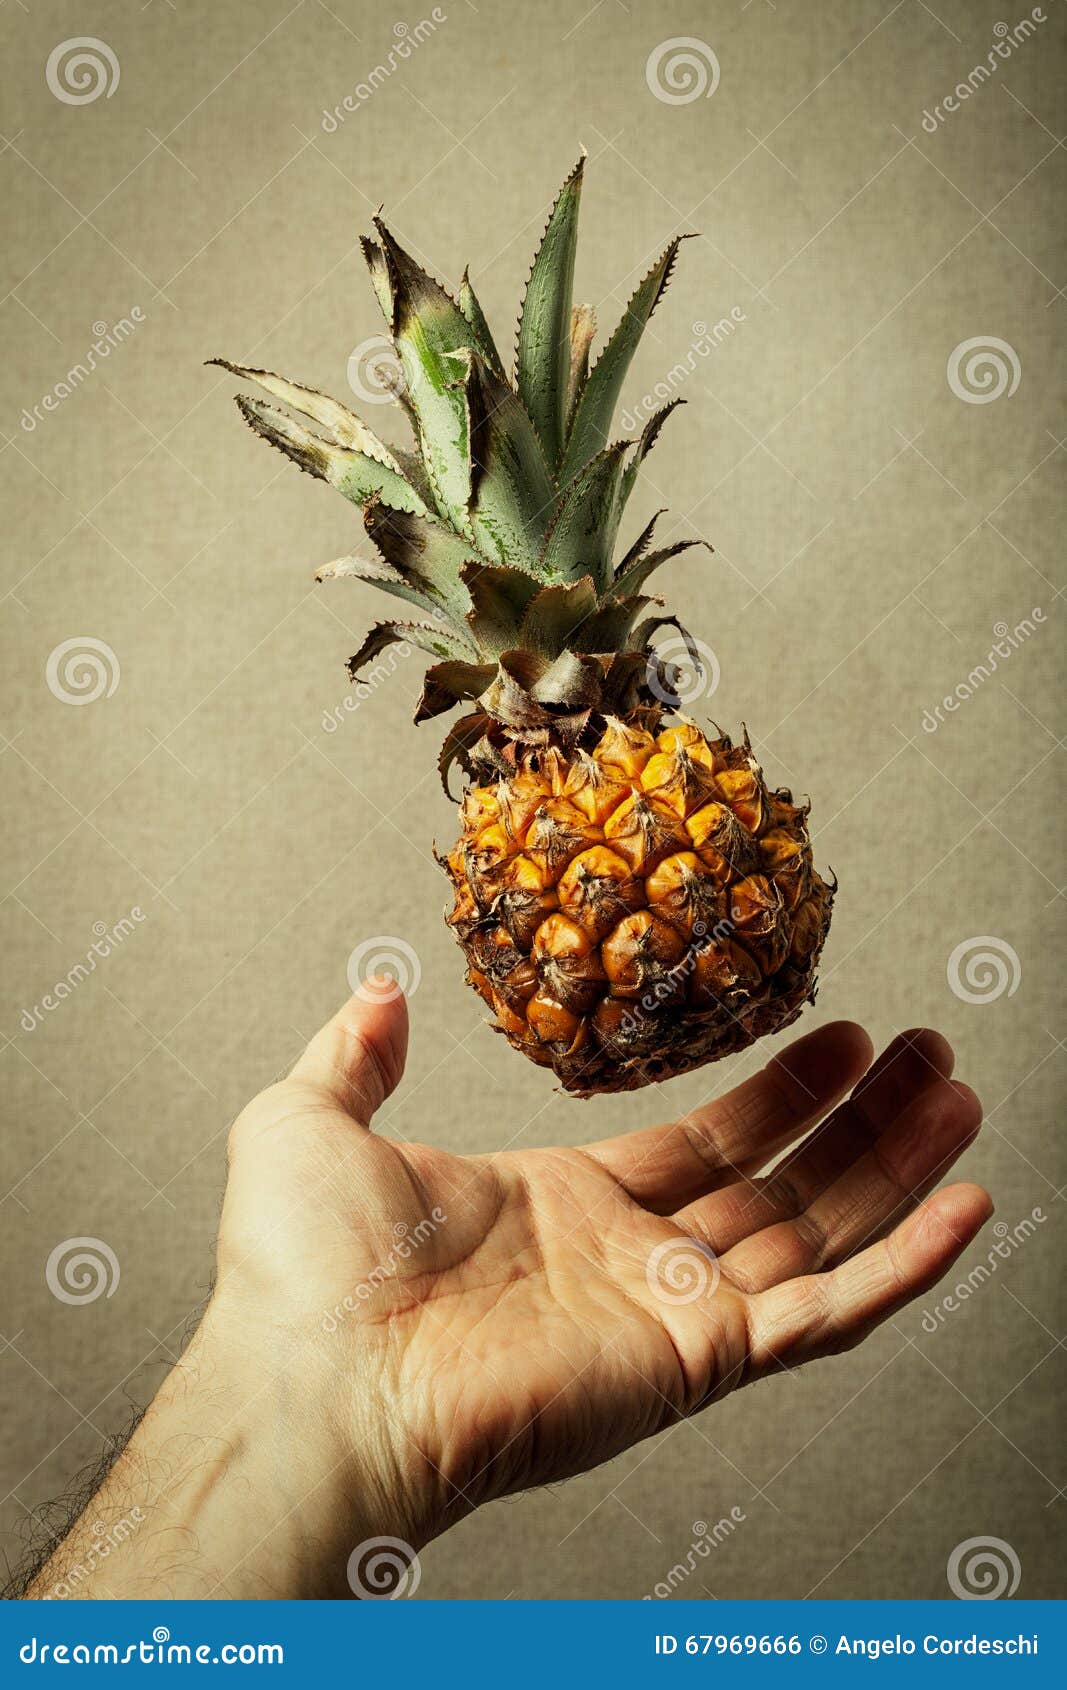 nano pineapple. nature and man. food lightness.